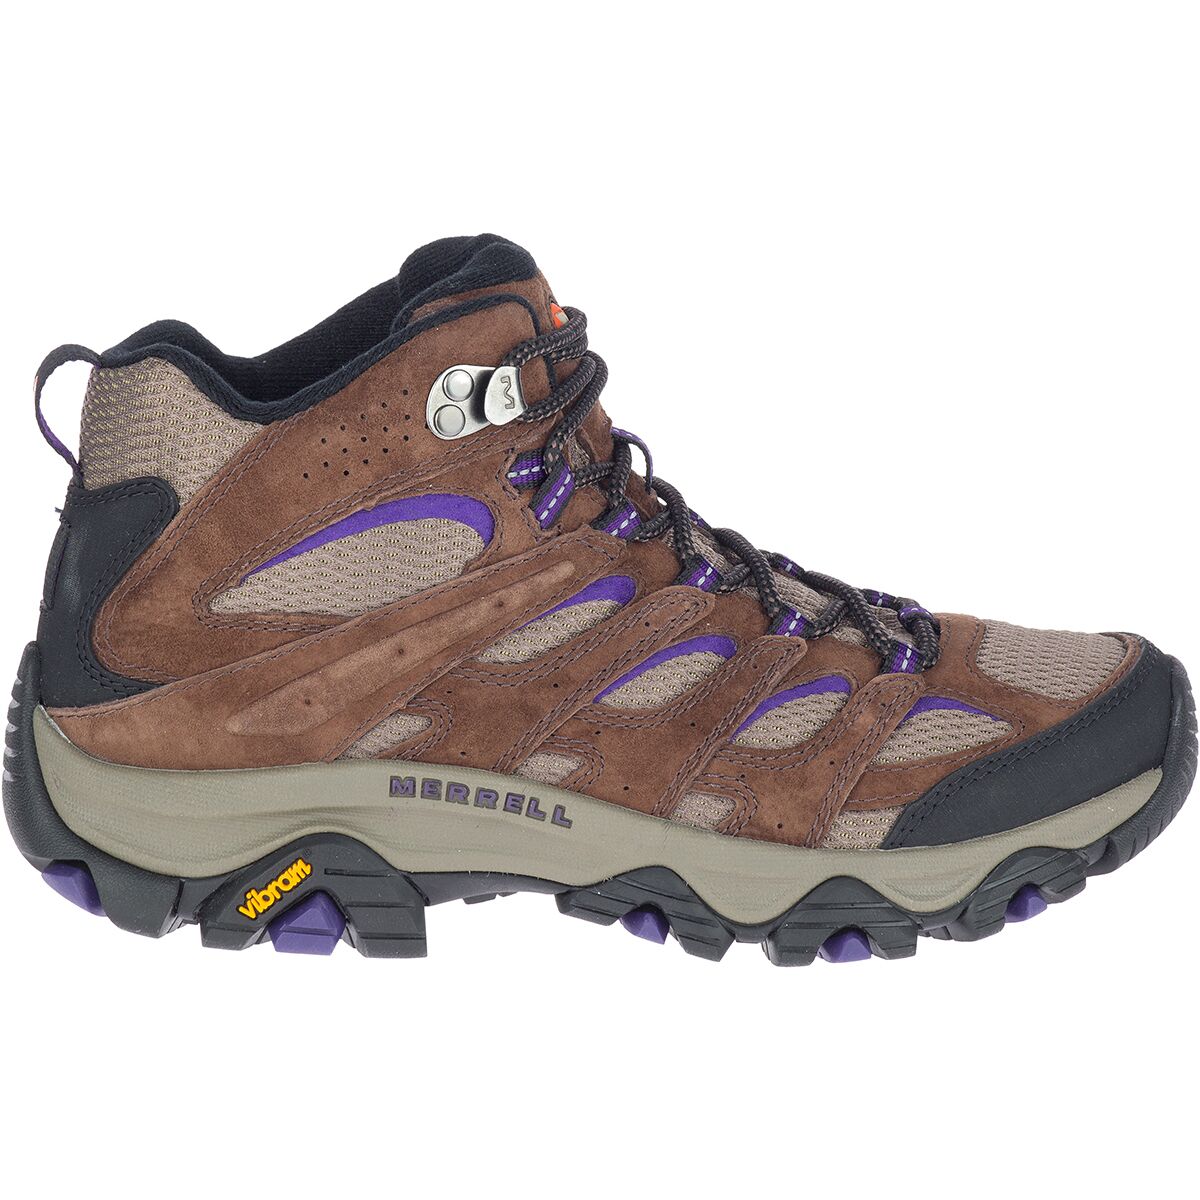 Merrell Moab 3 Mid Hiking Boot - Women's